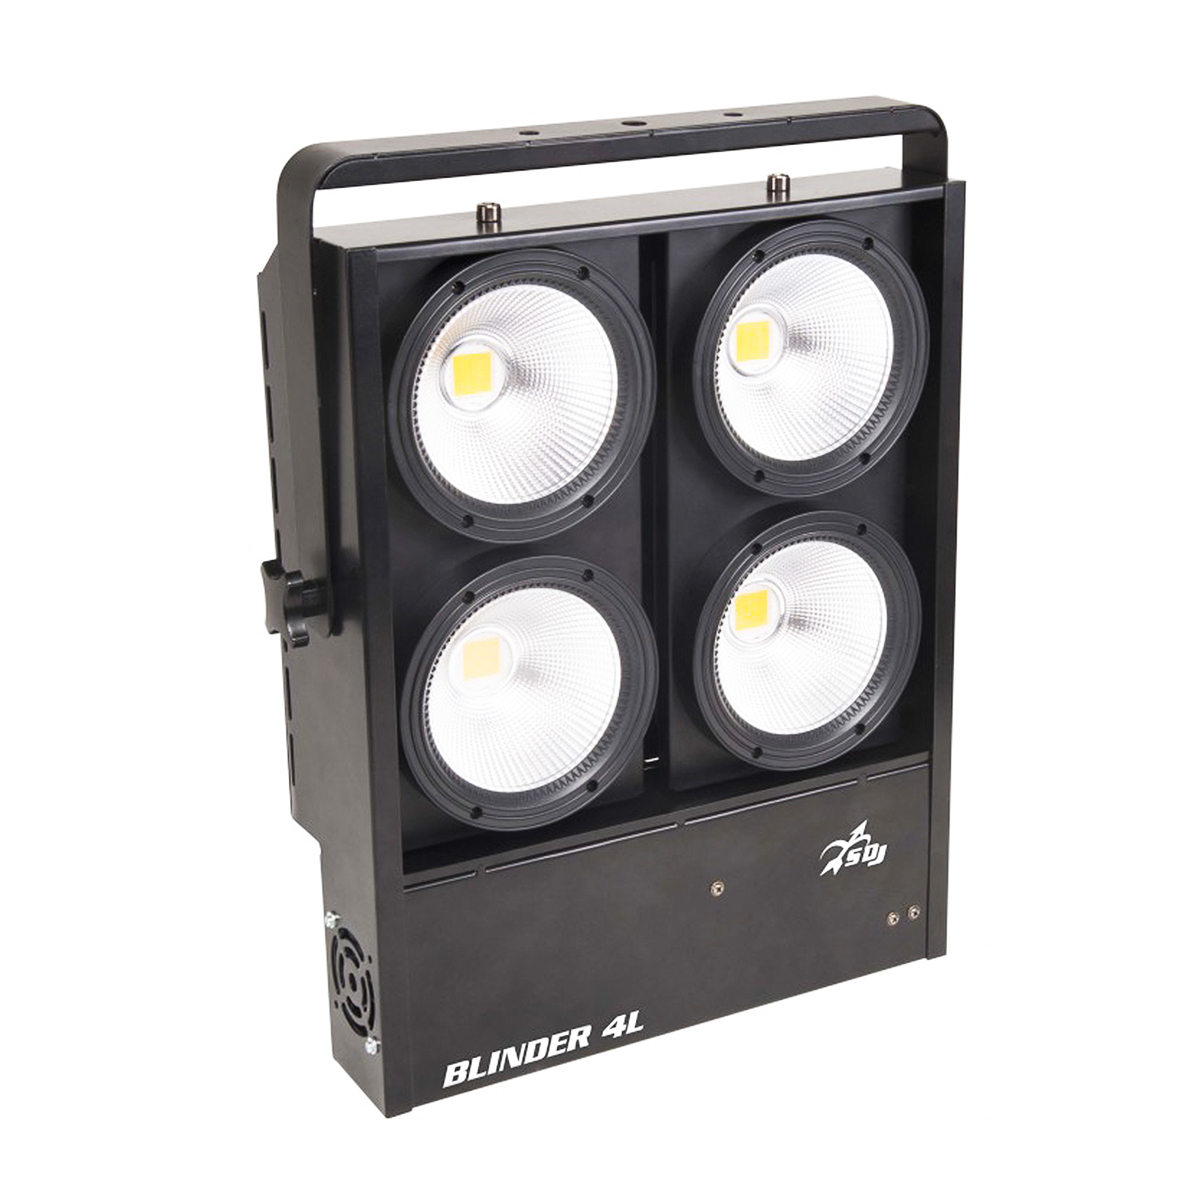 Sagitter 4L LED BLINDER 4 Ditronics Ecuador 2